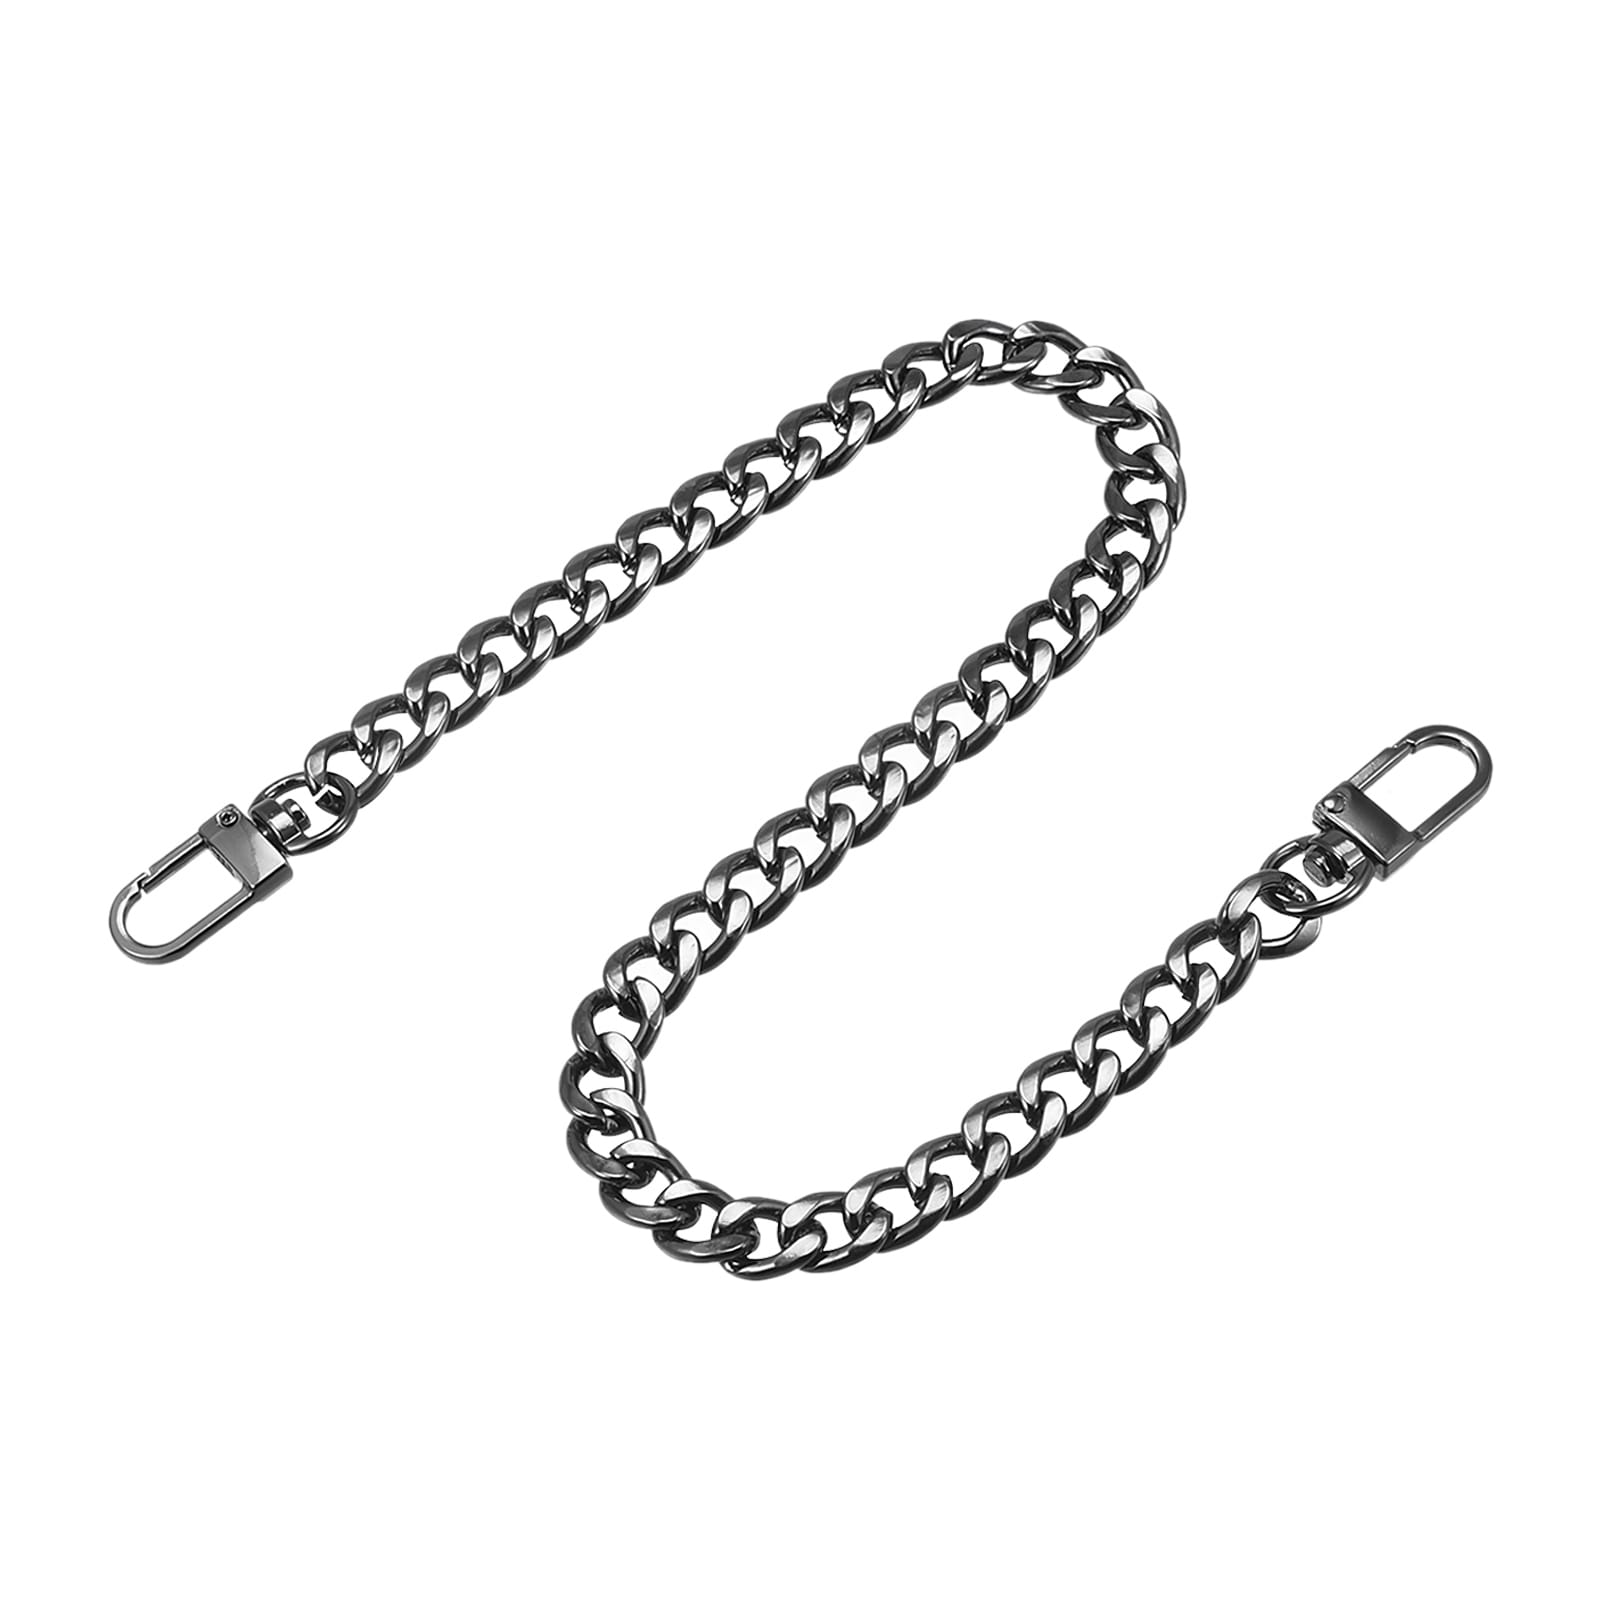 4pcs Purse Bag Chain Length Adjusting Buckle Metal Bag Strap Chain